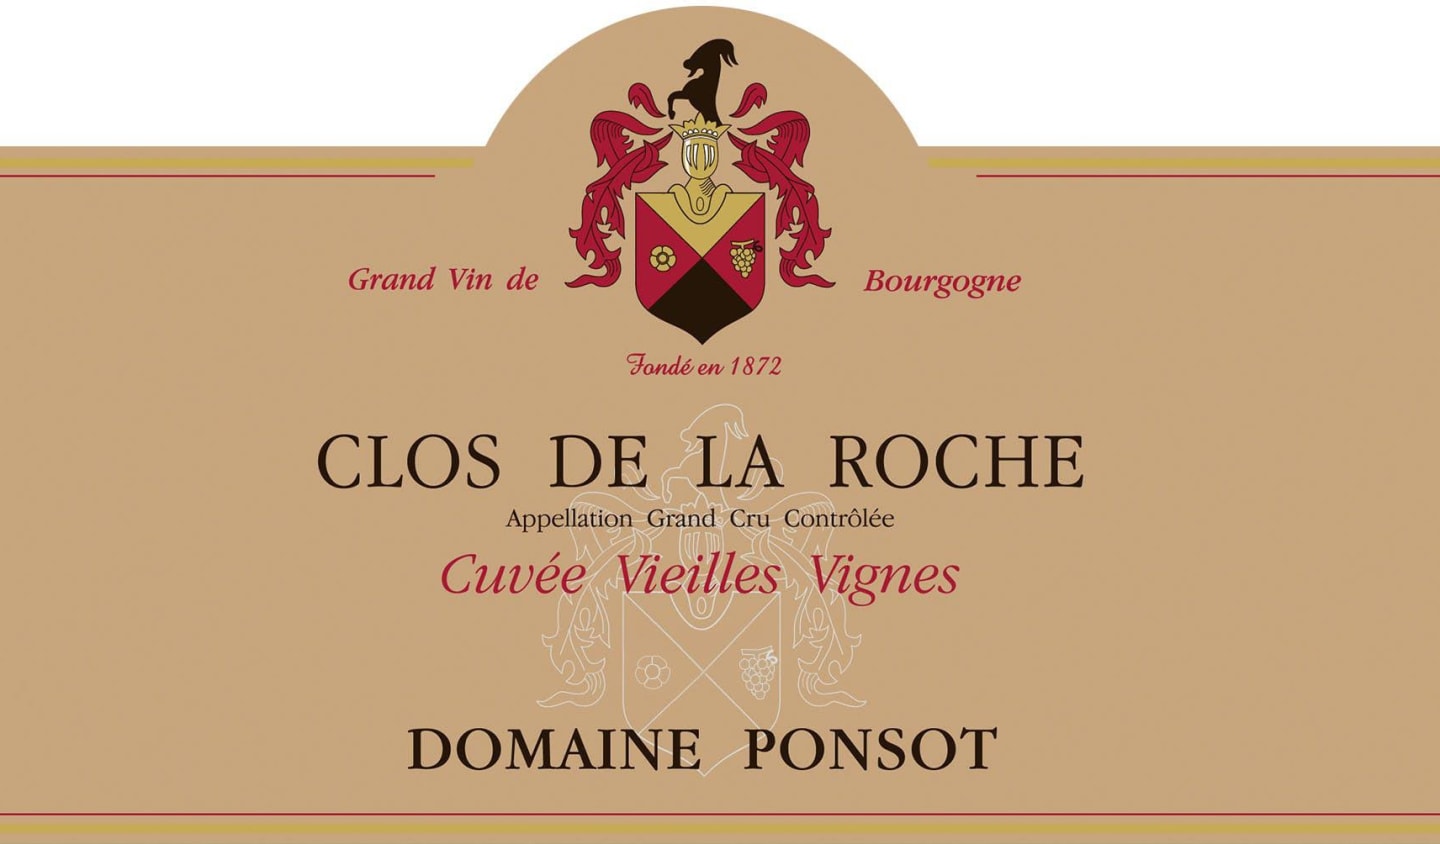 Domaine Ponsot Clos de la Roche Grand Cru "Cuvee Vieilles Vignes" (2015)